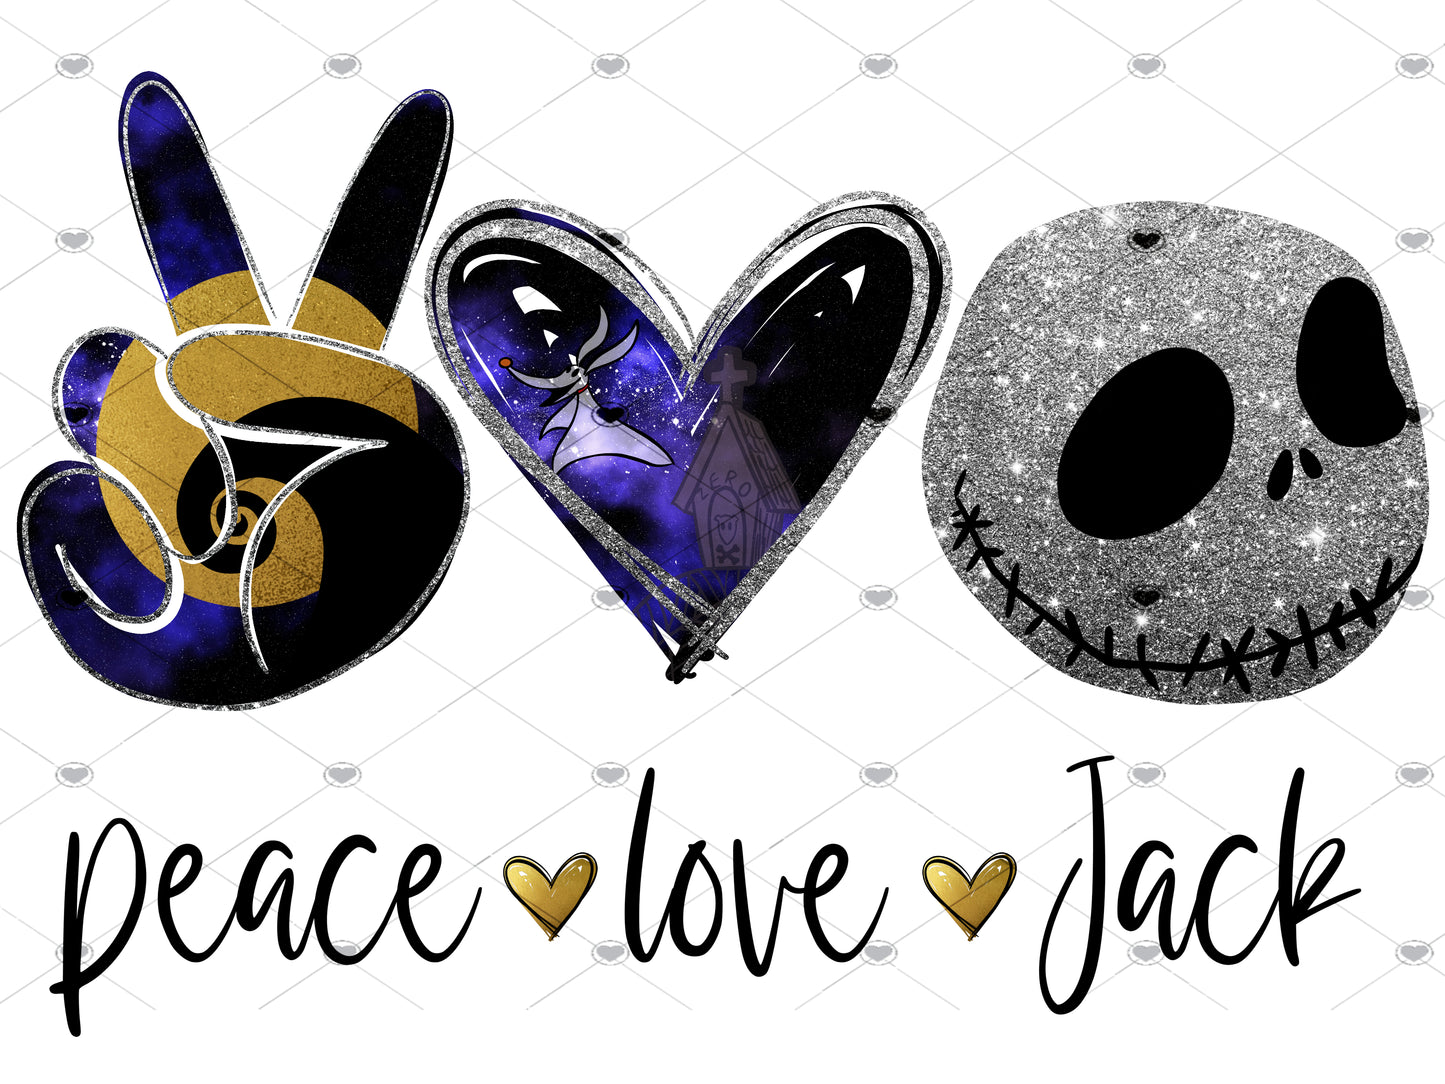 Peace Love Jack